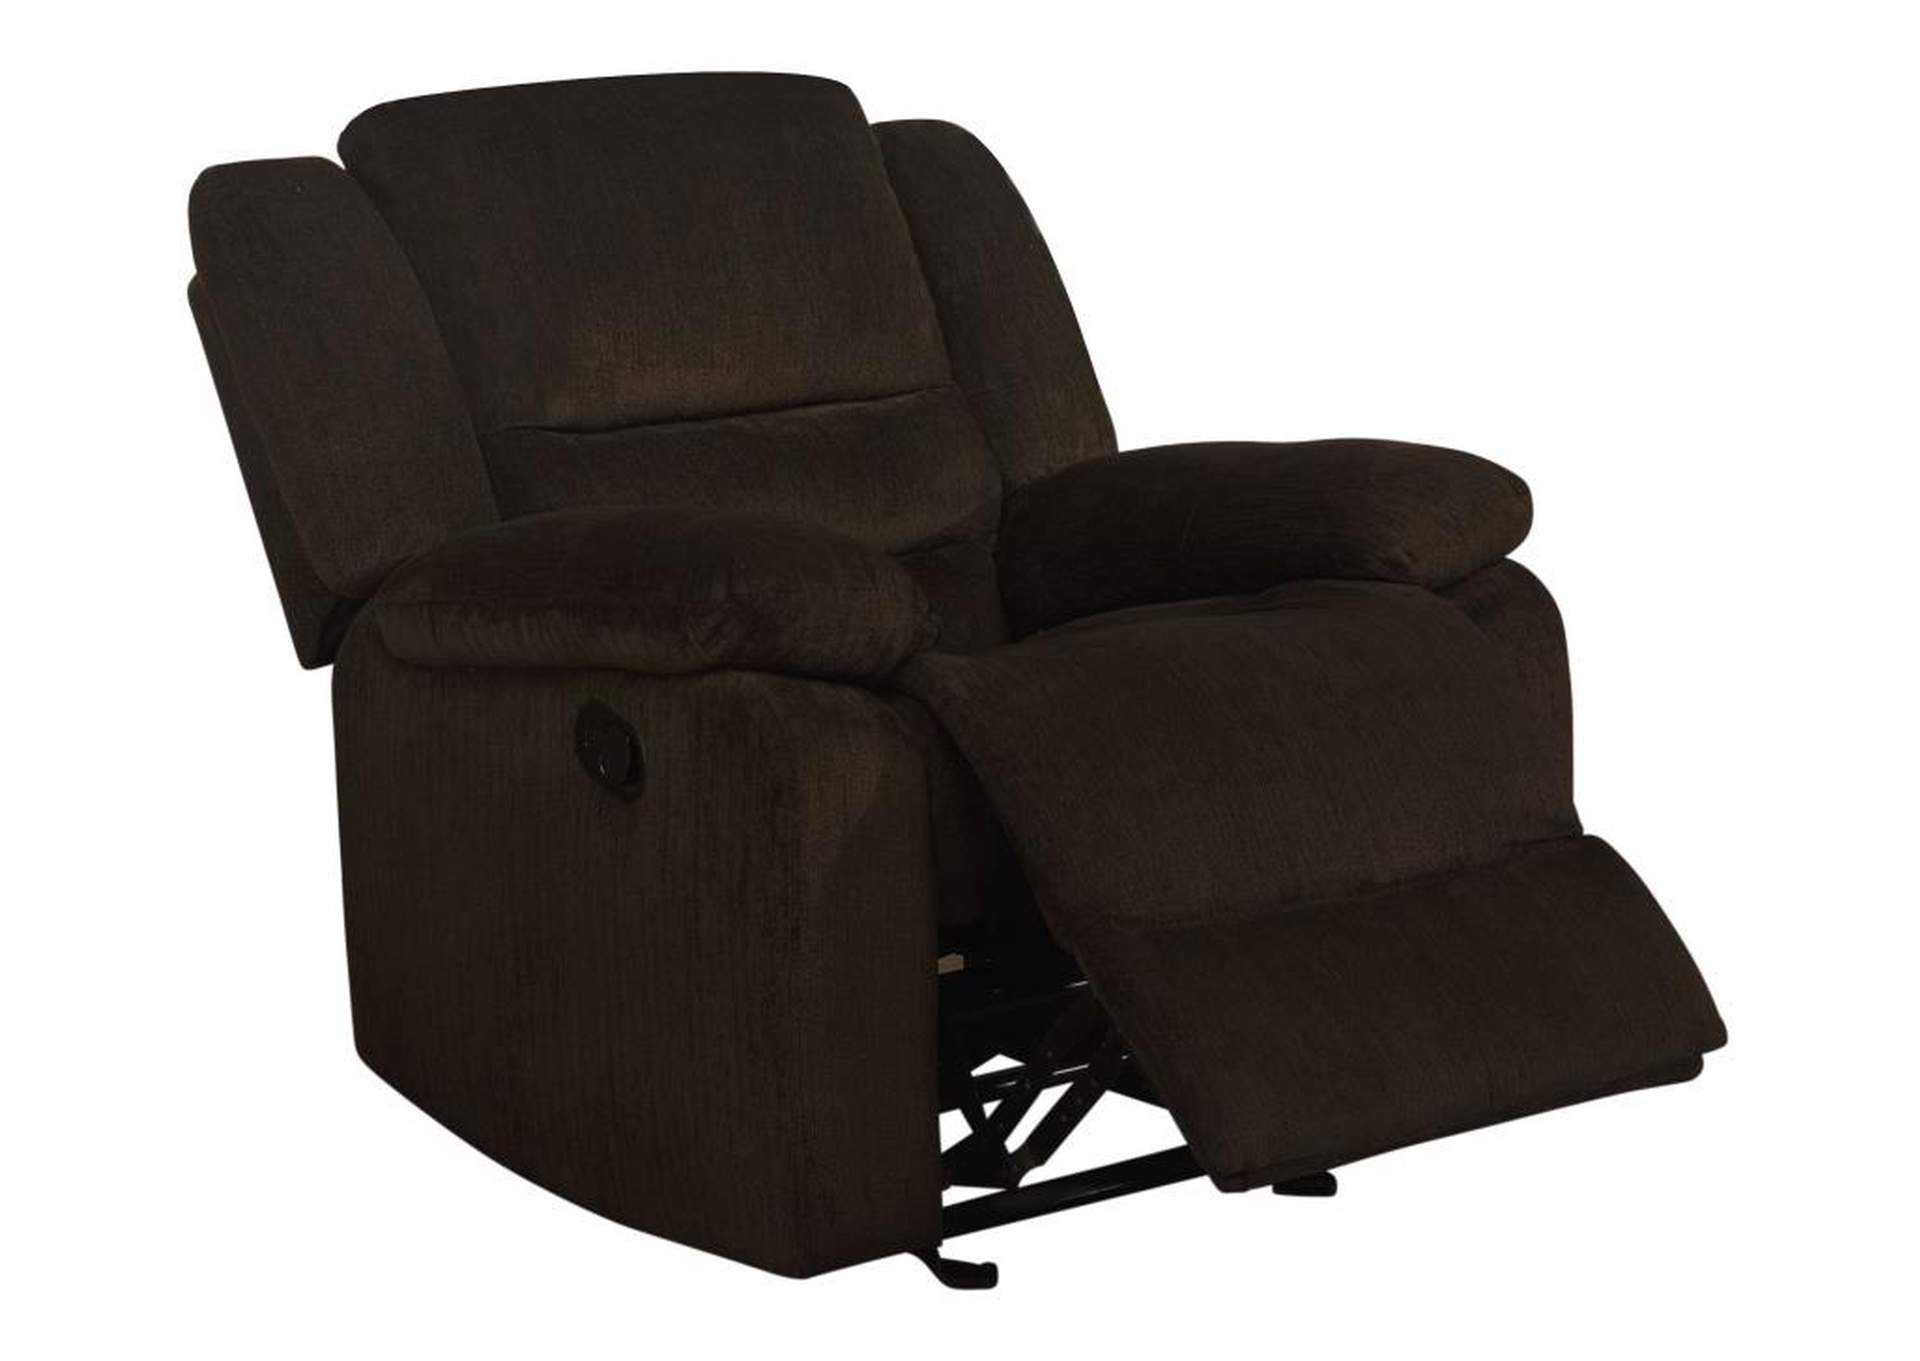 Gordon Upholstered Glider Recliner Chocolate,Coaster Furniture